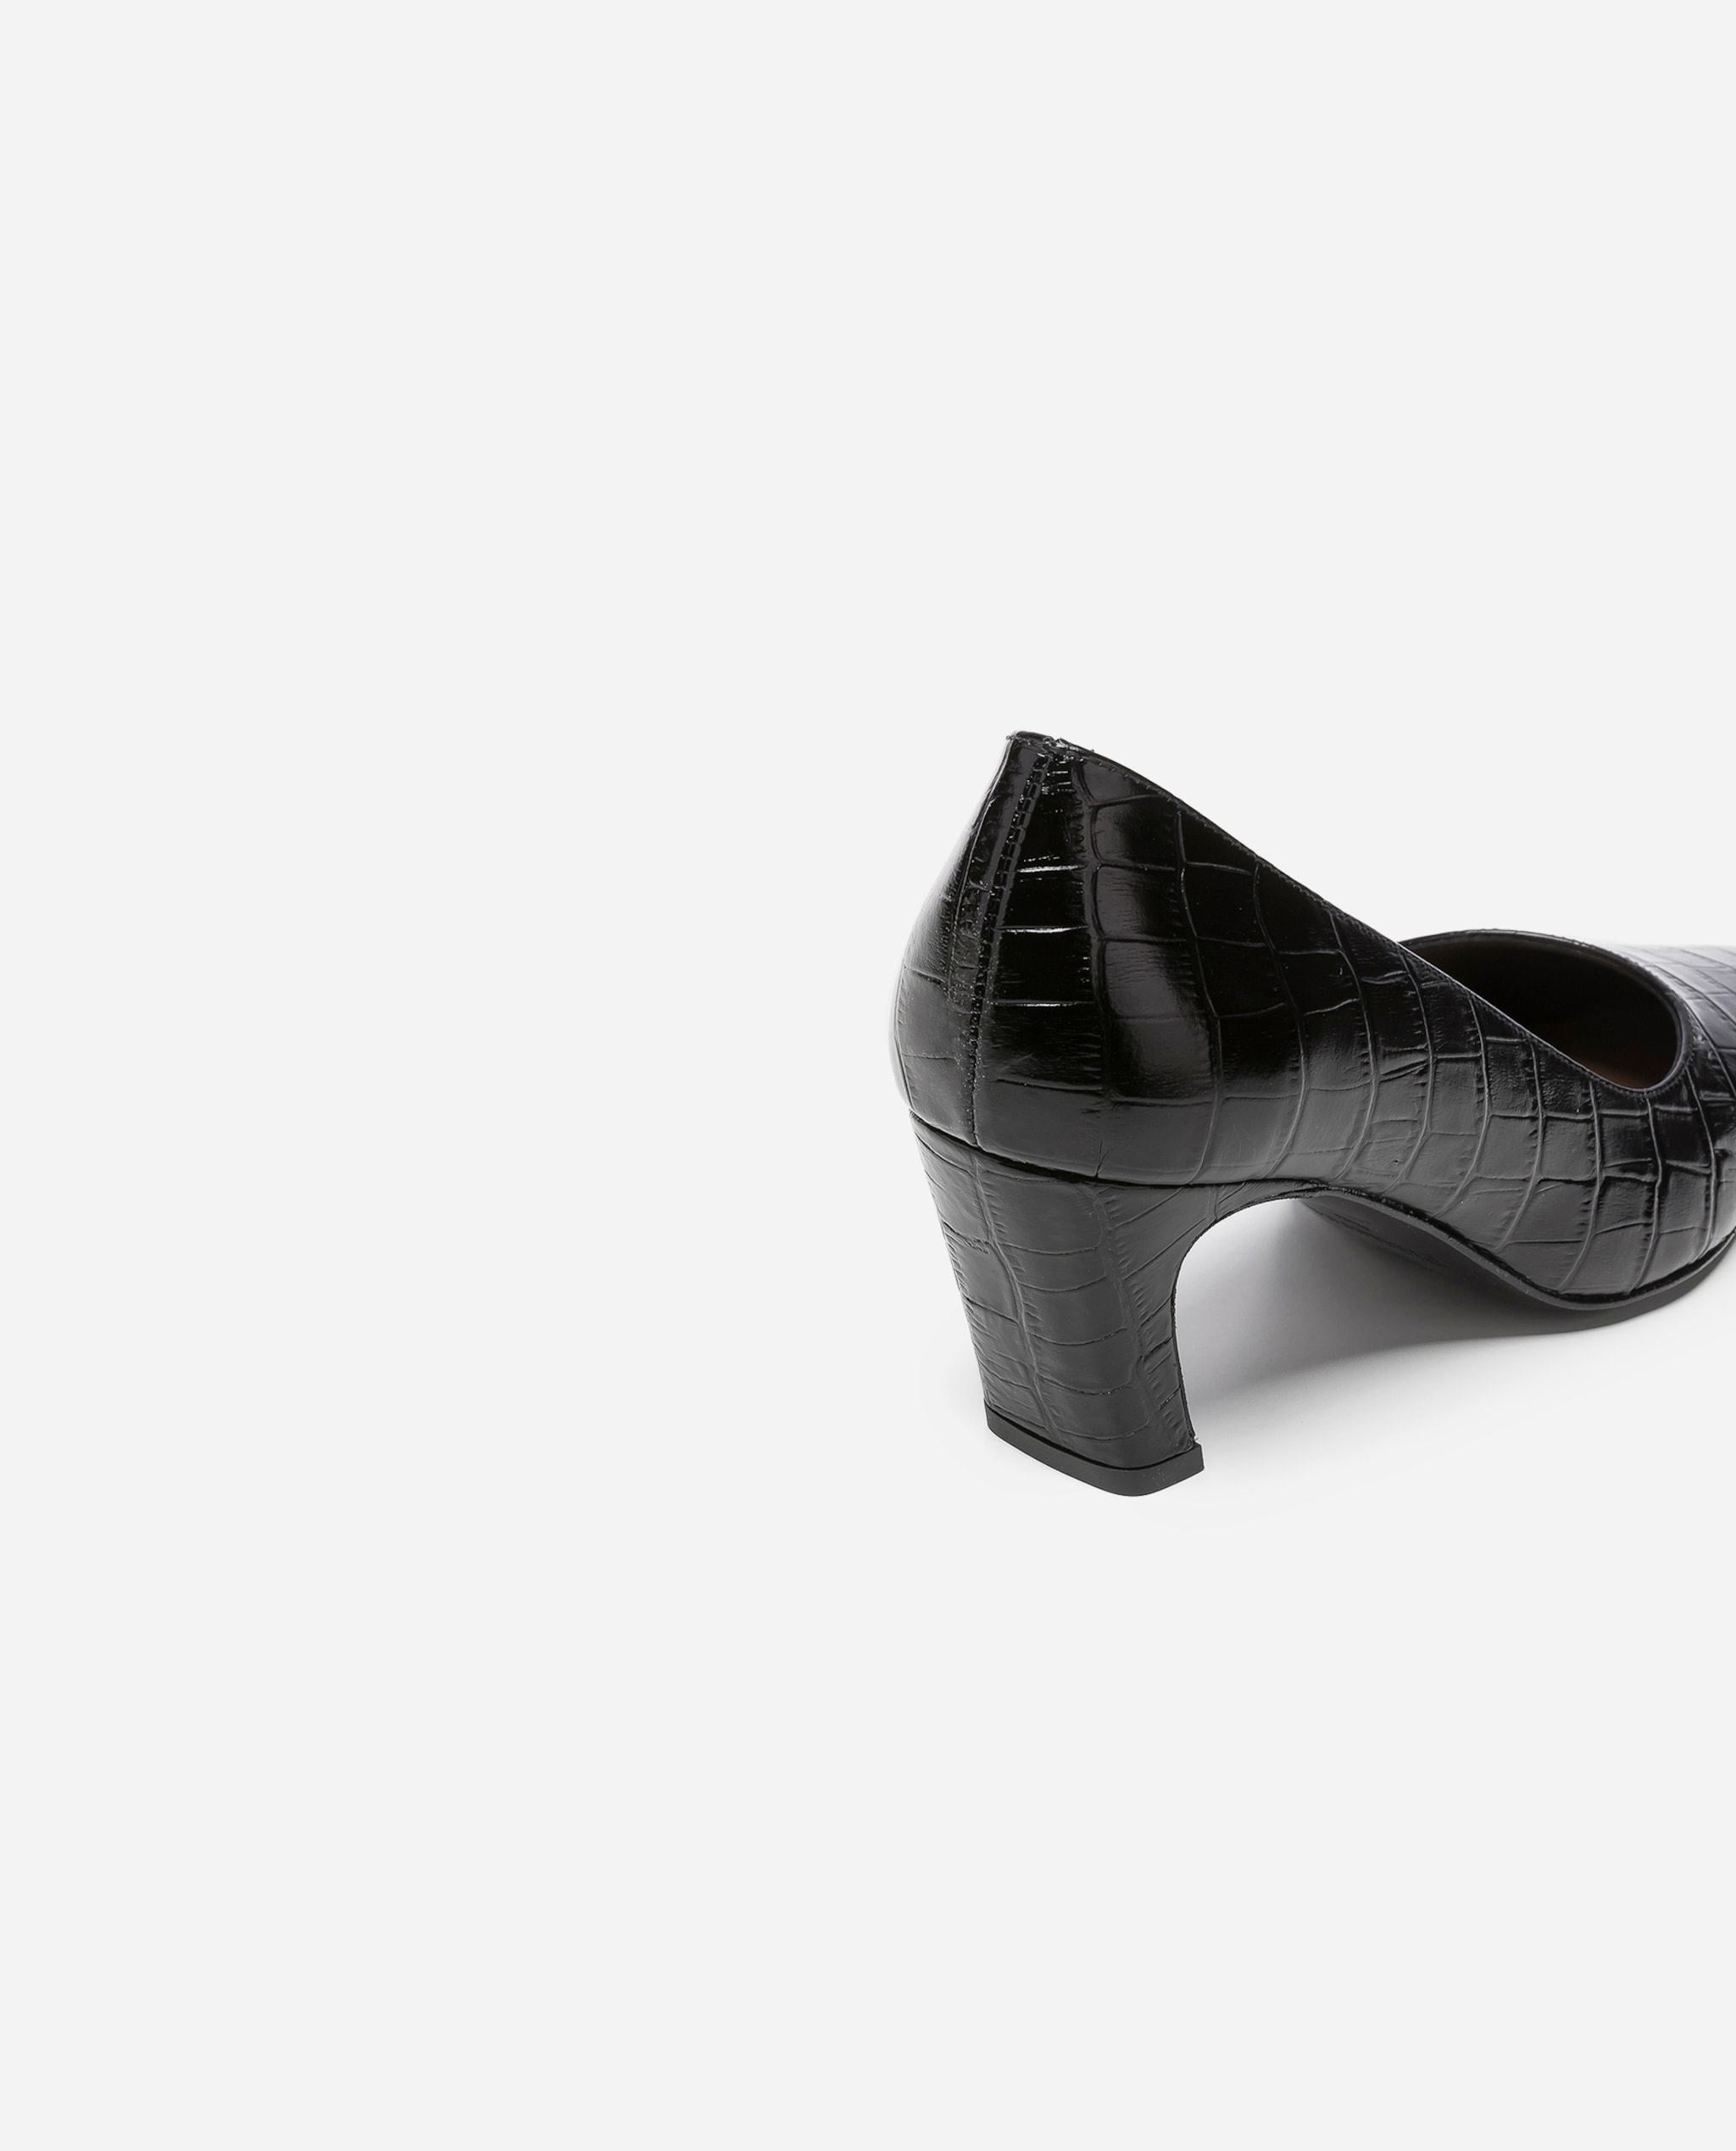 Iggy Nappa Black Croco Shoes 20010411217-001 - 7